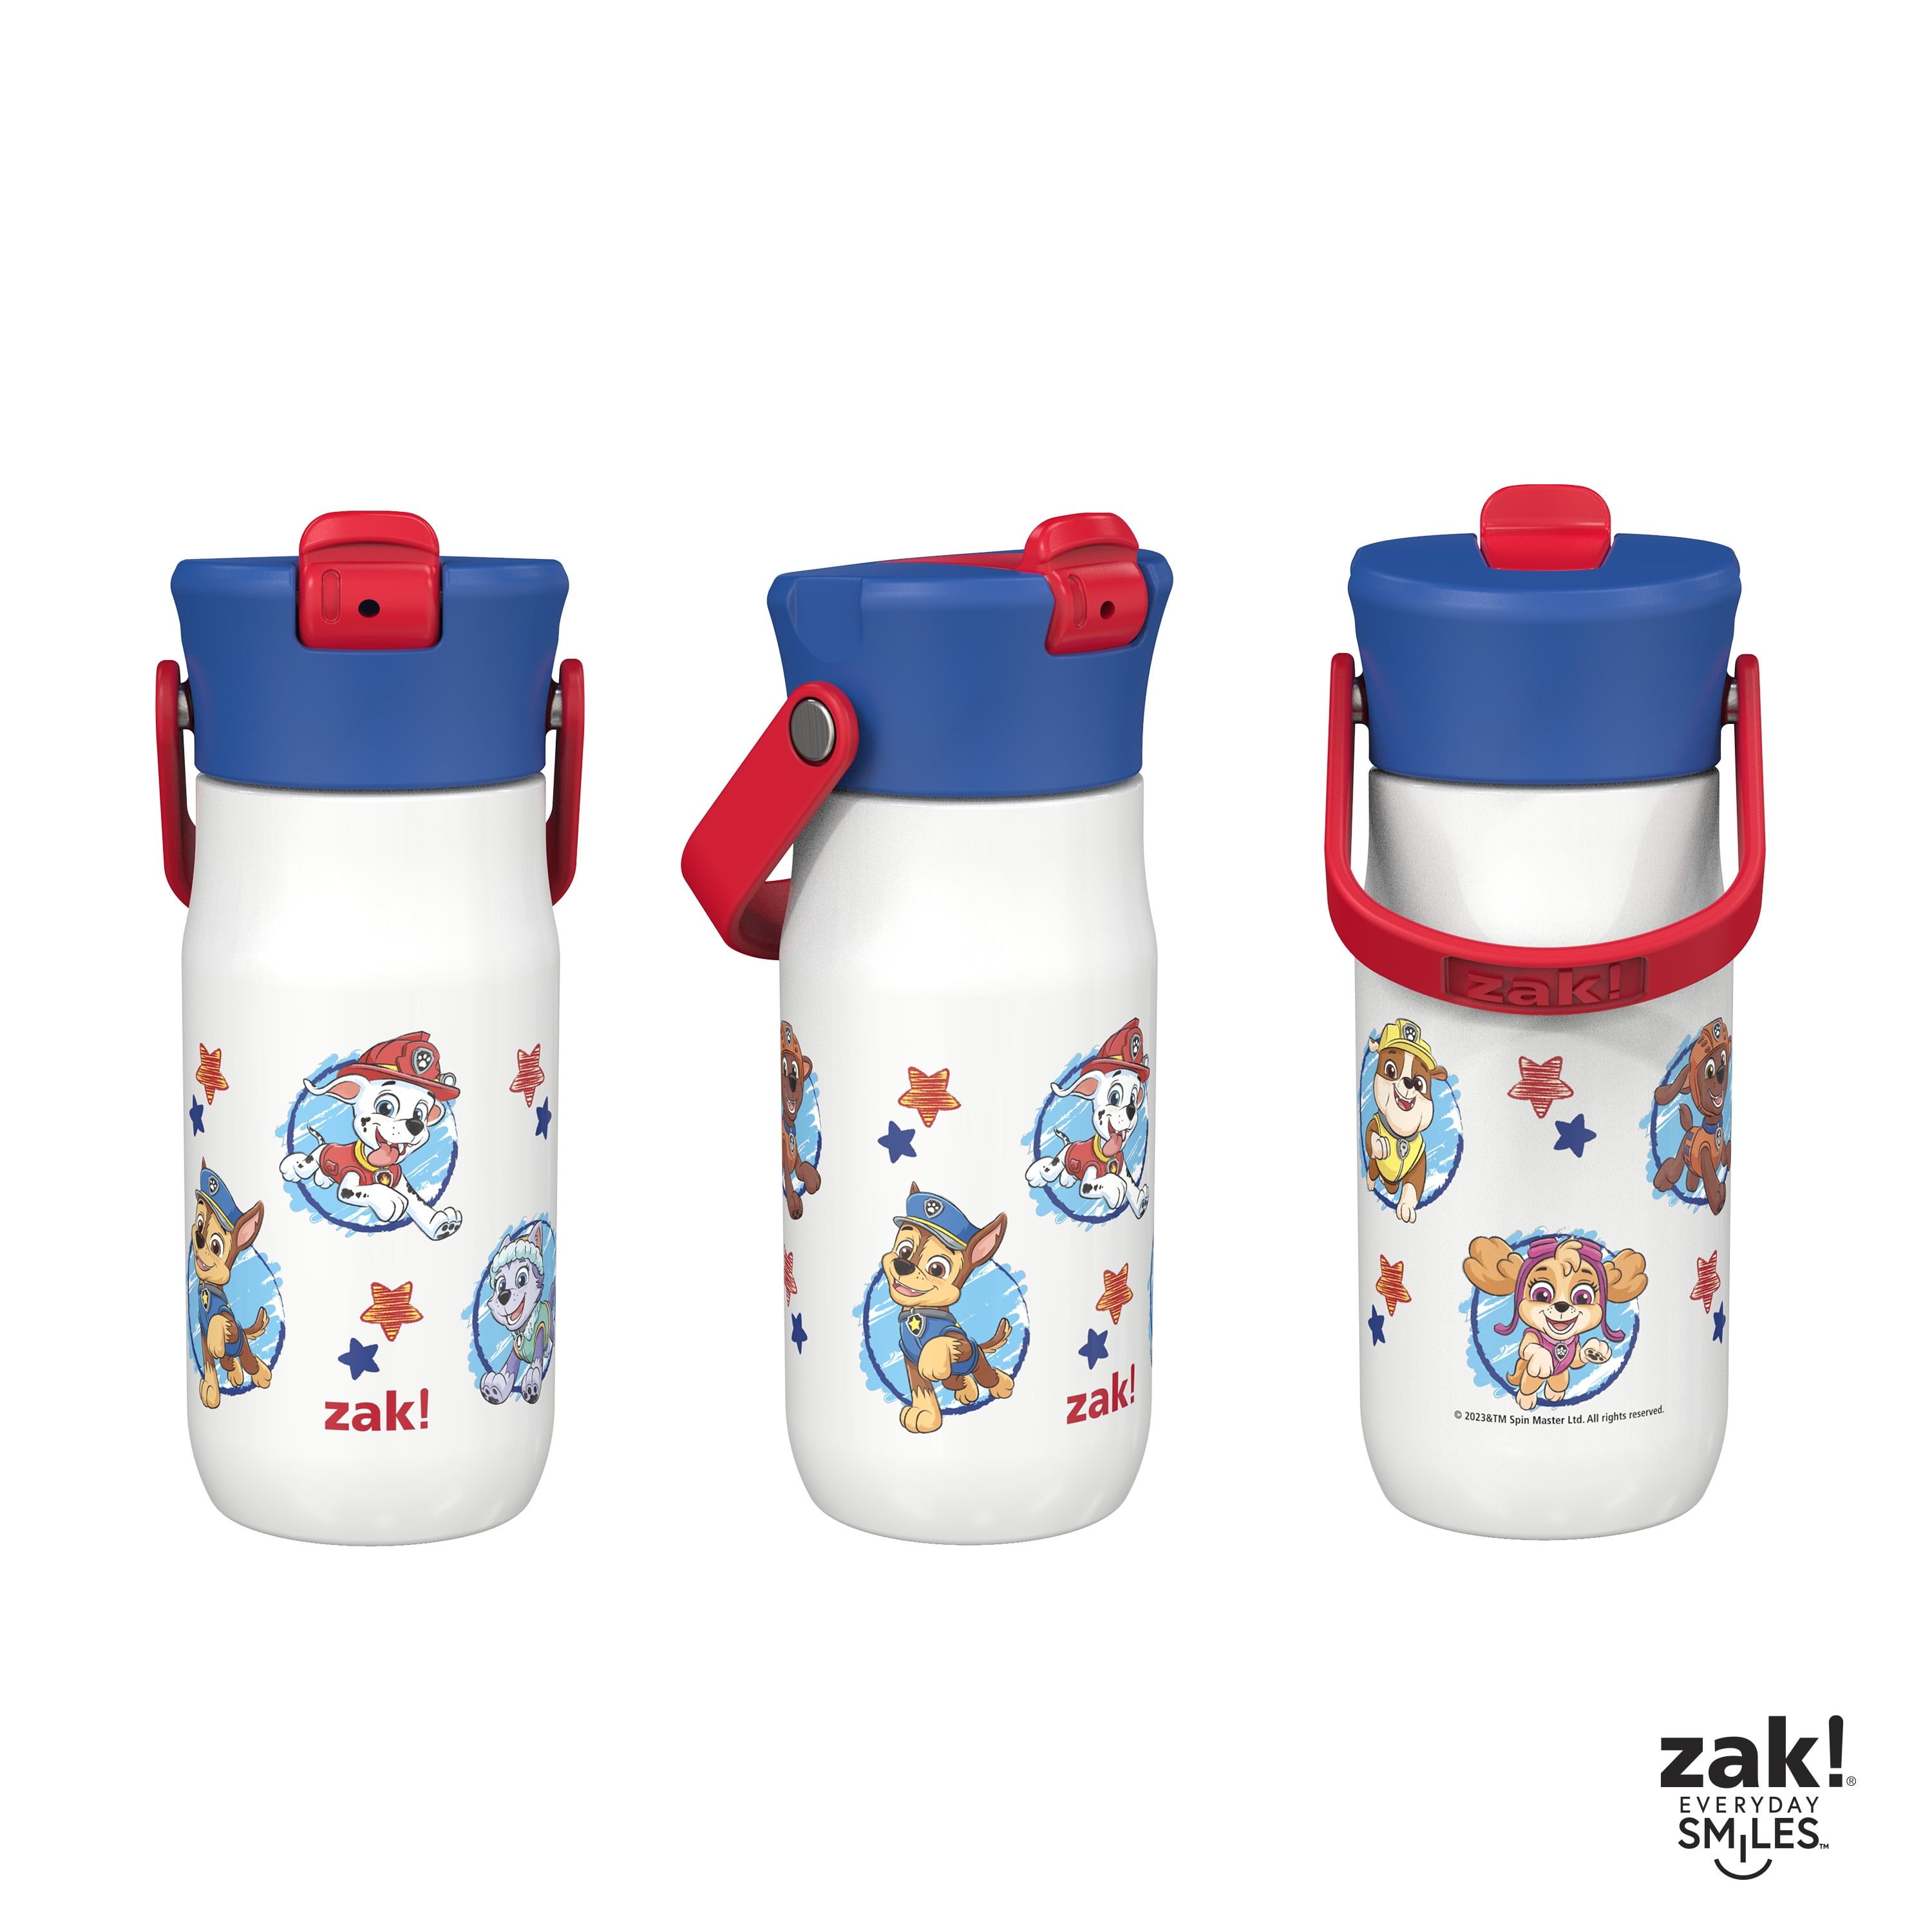 Mackenzie PAW Patrol™ Water Bottles